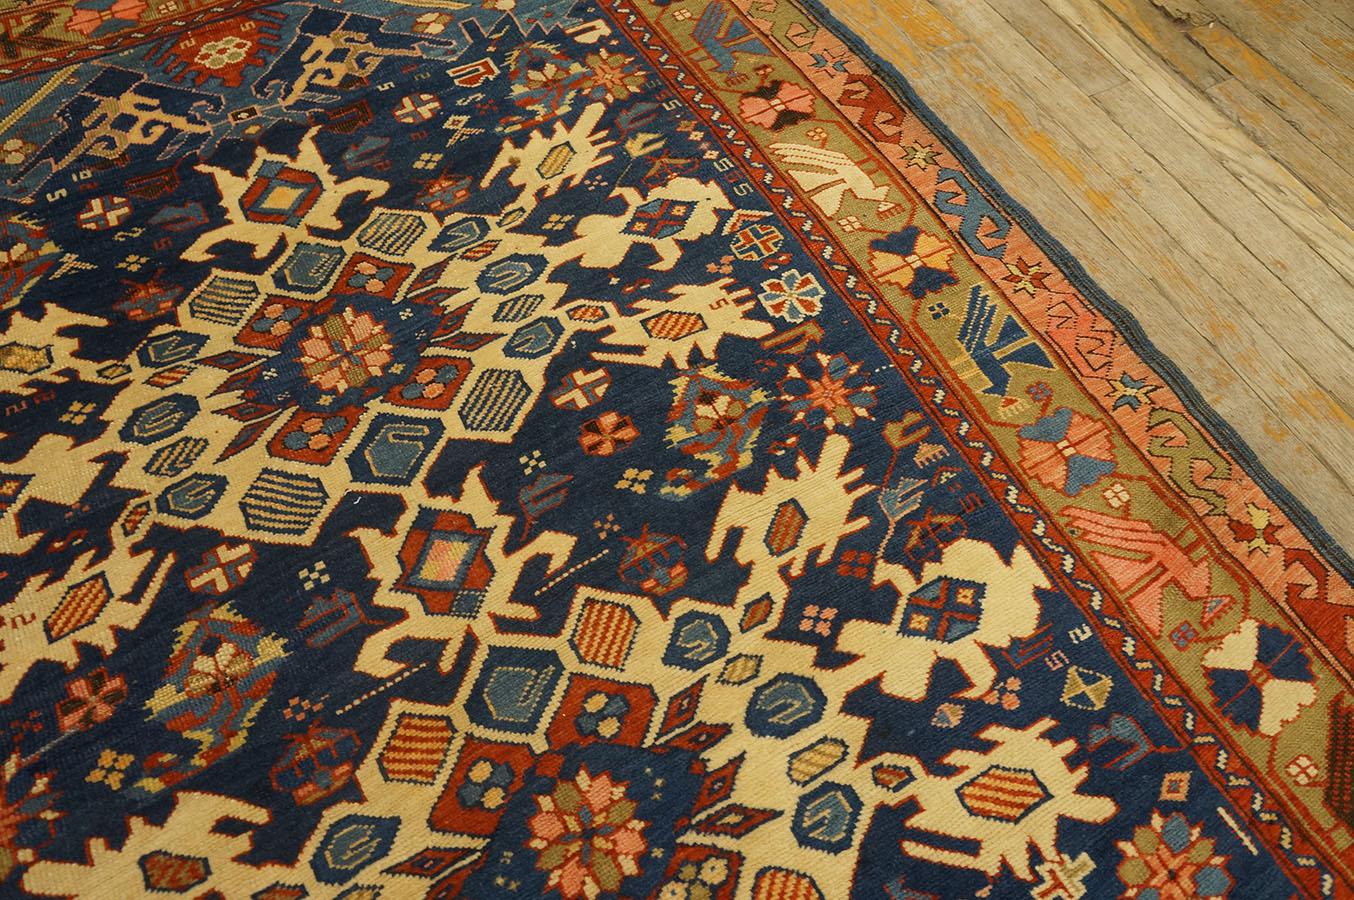 Late 19th Century Caucasian Bidjov Carpet ( 4'6'' x 5'8'' - 122 x 183 cm) For Sale 6